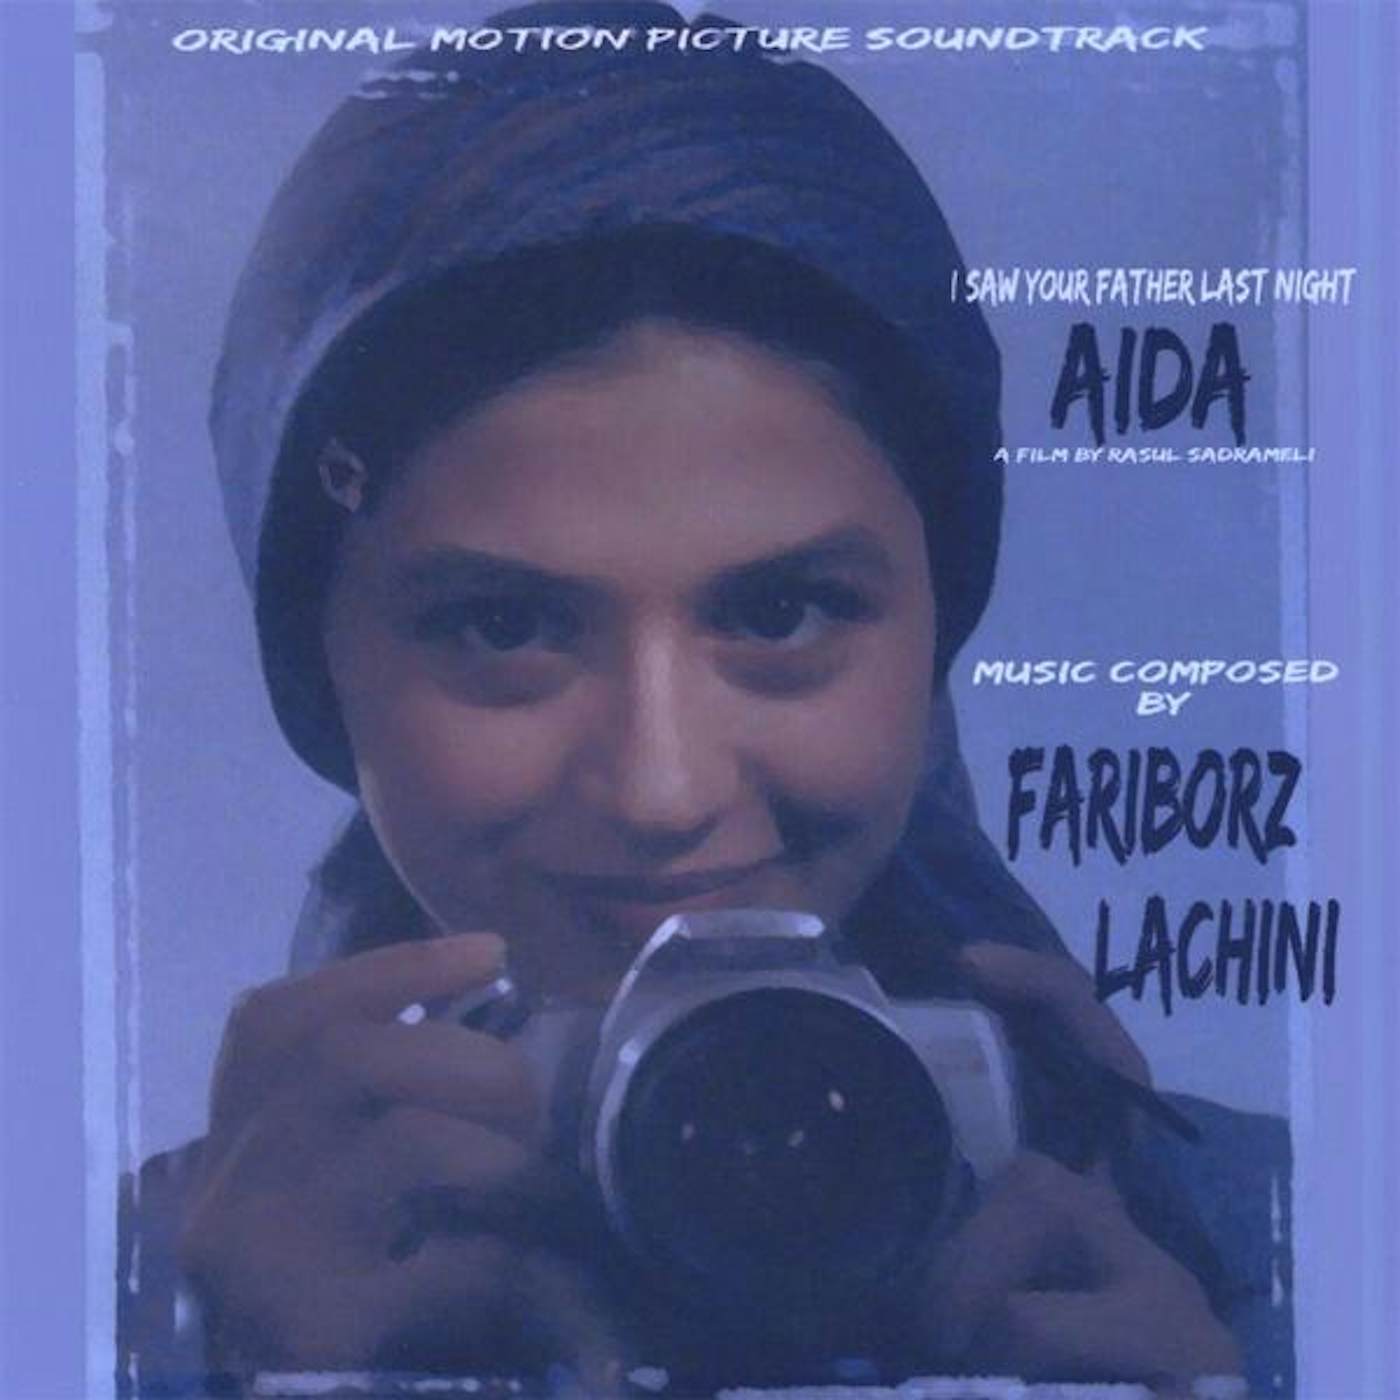 Fariborz Lachini AIDA CD